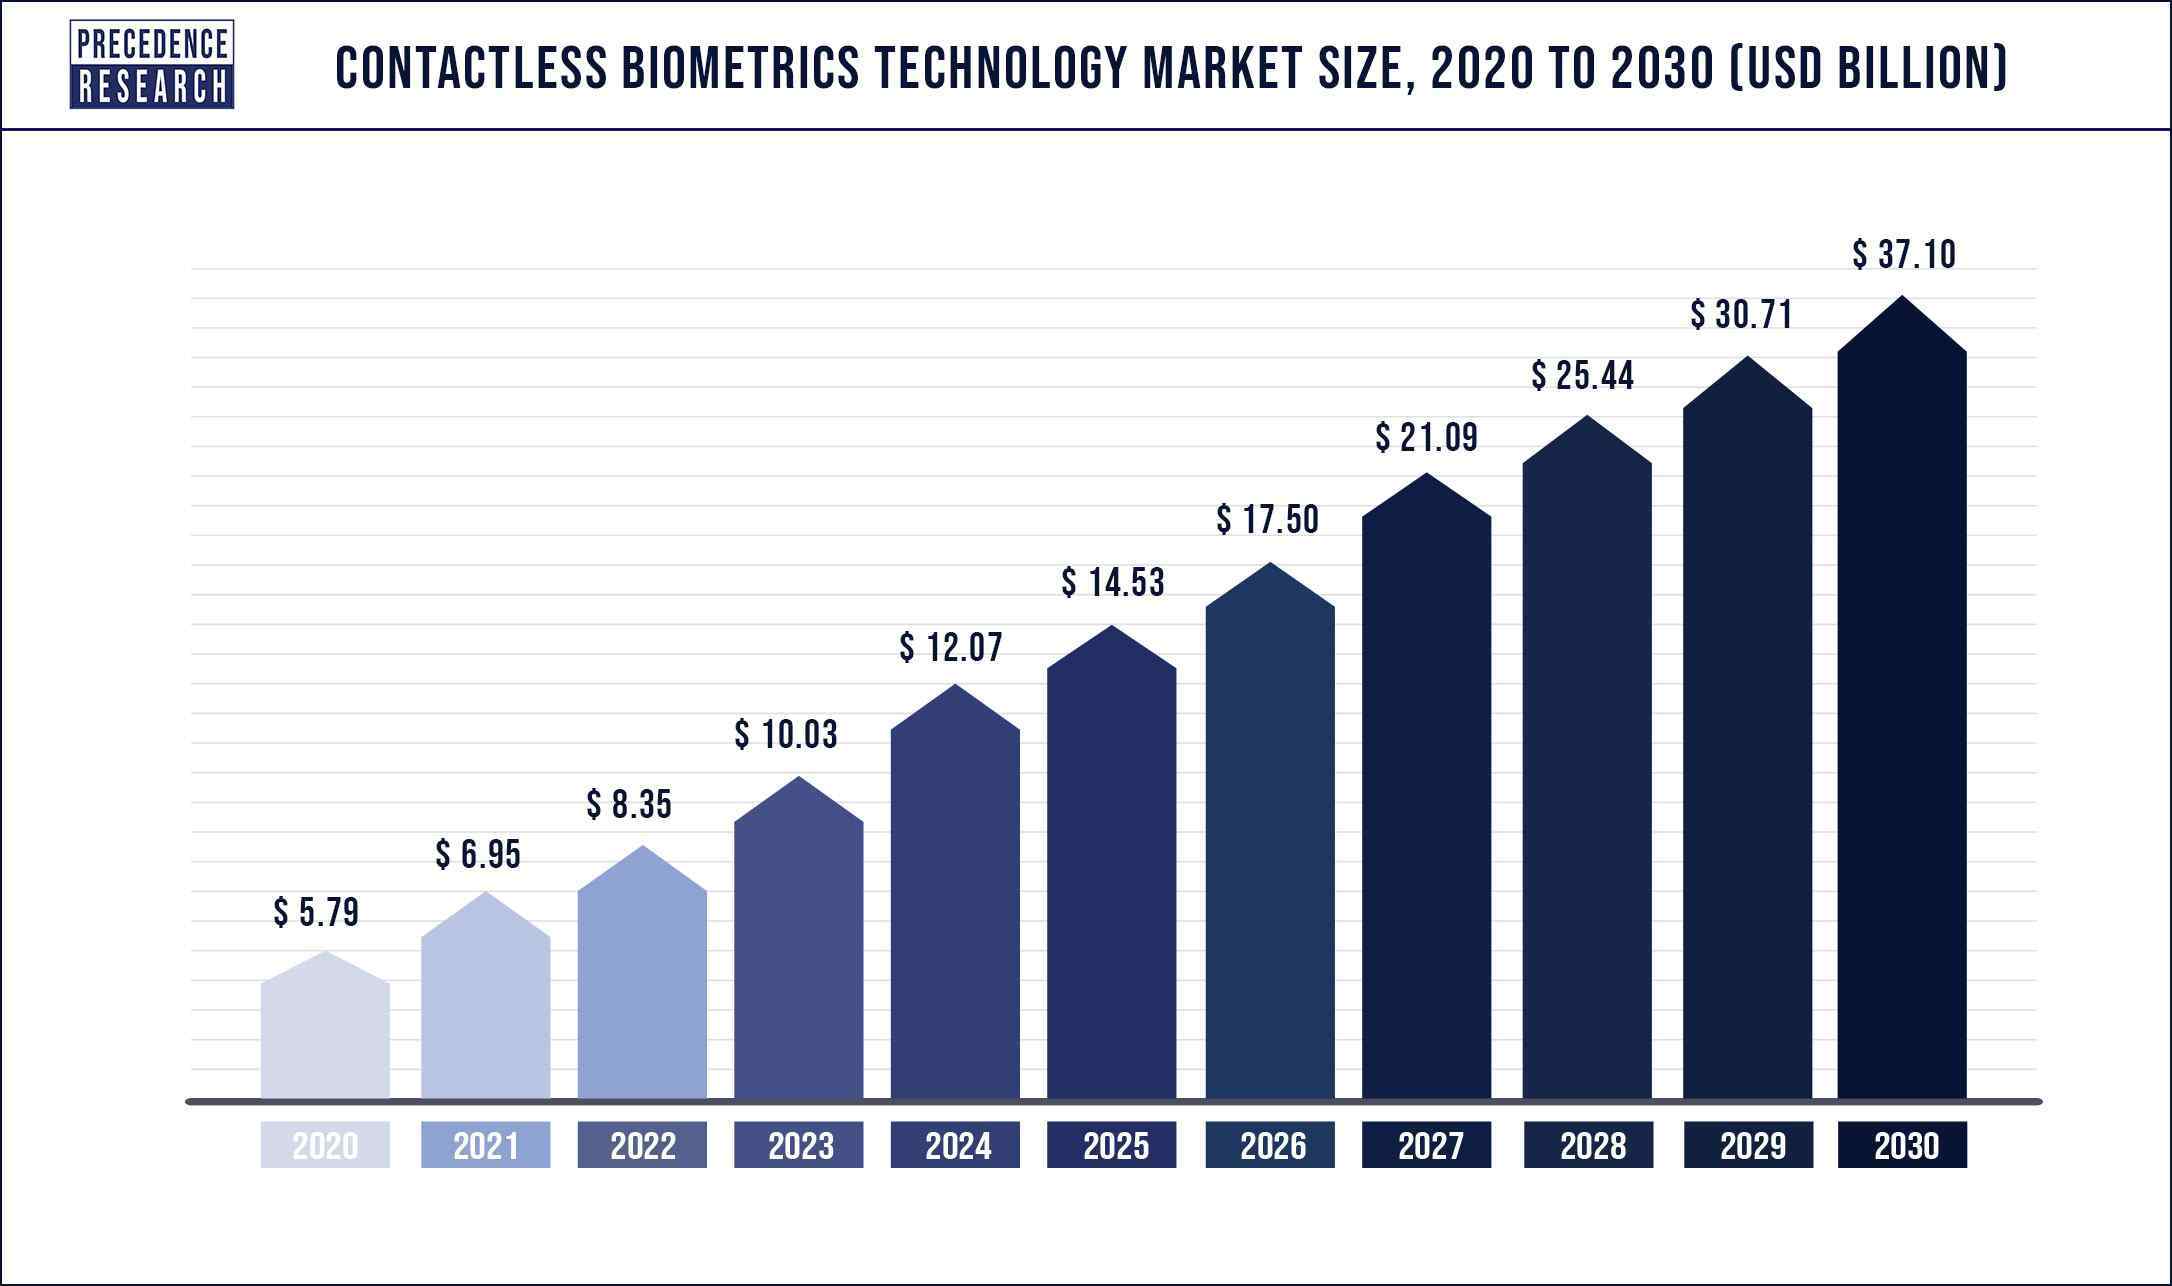 Contactless Biometrics Technology Market Size 2020 to 2030